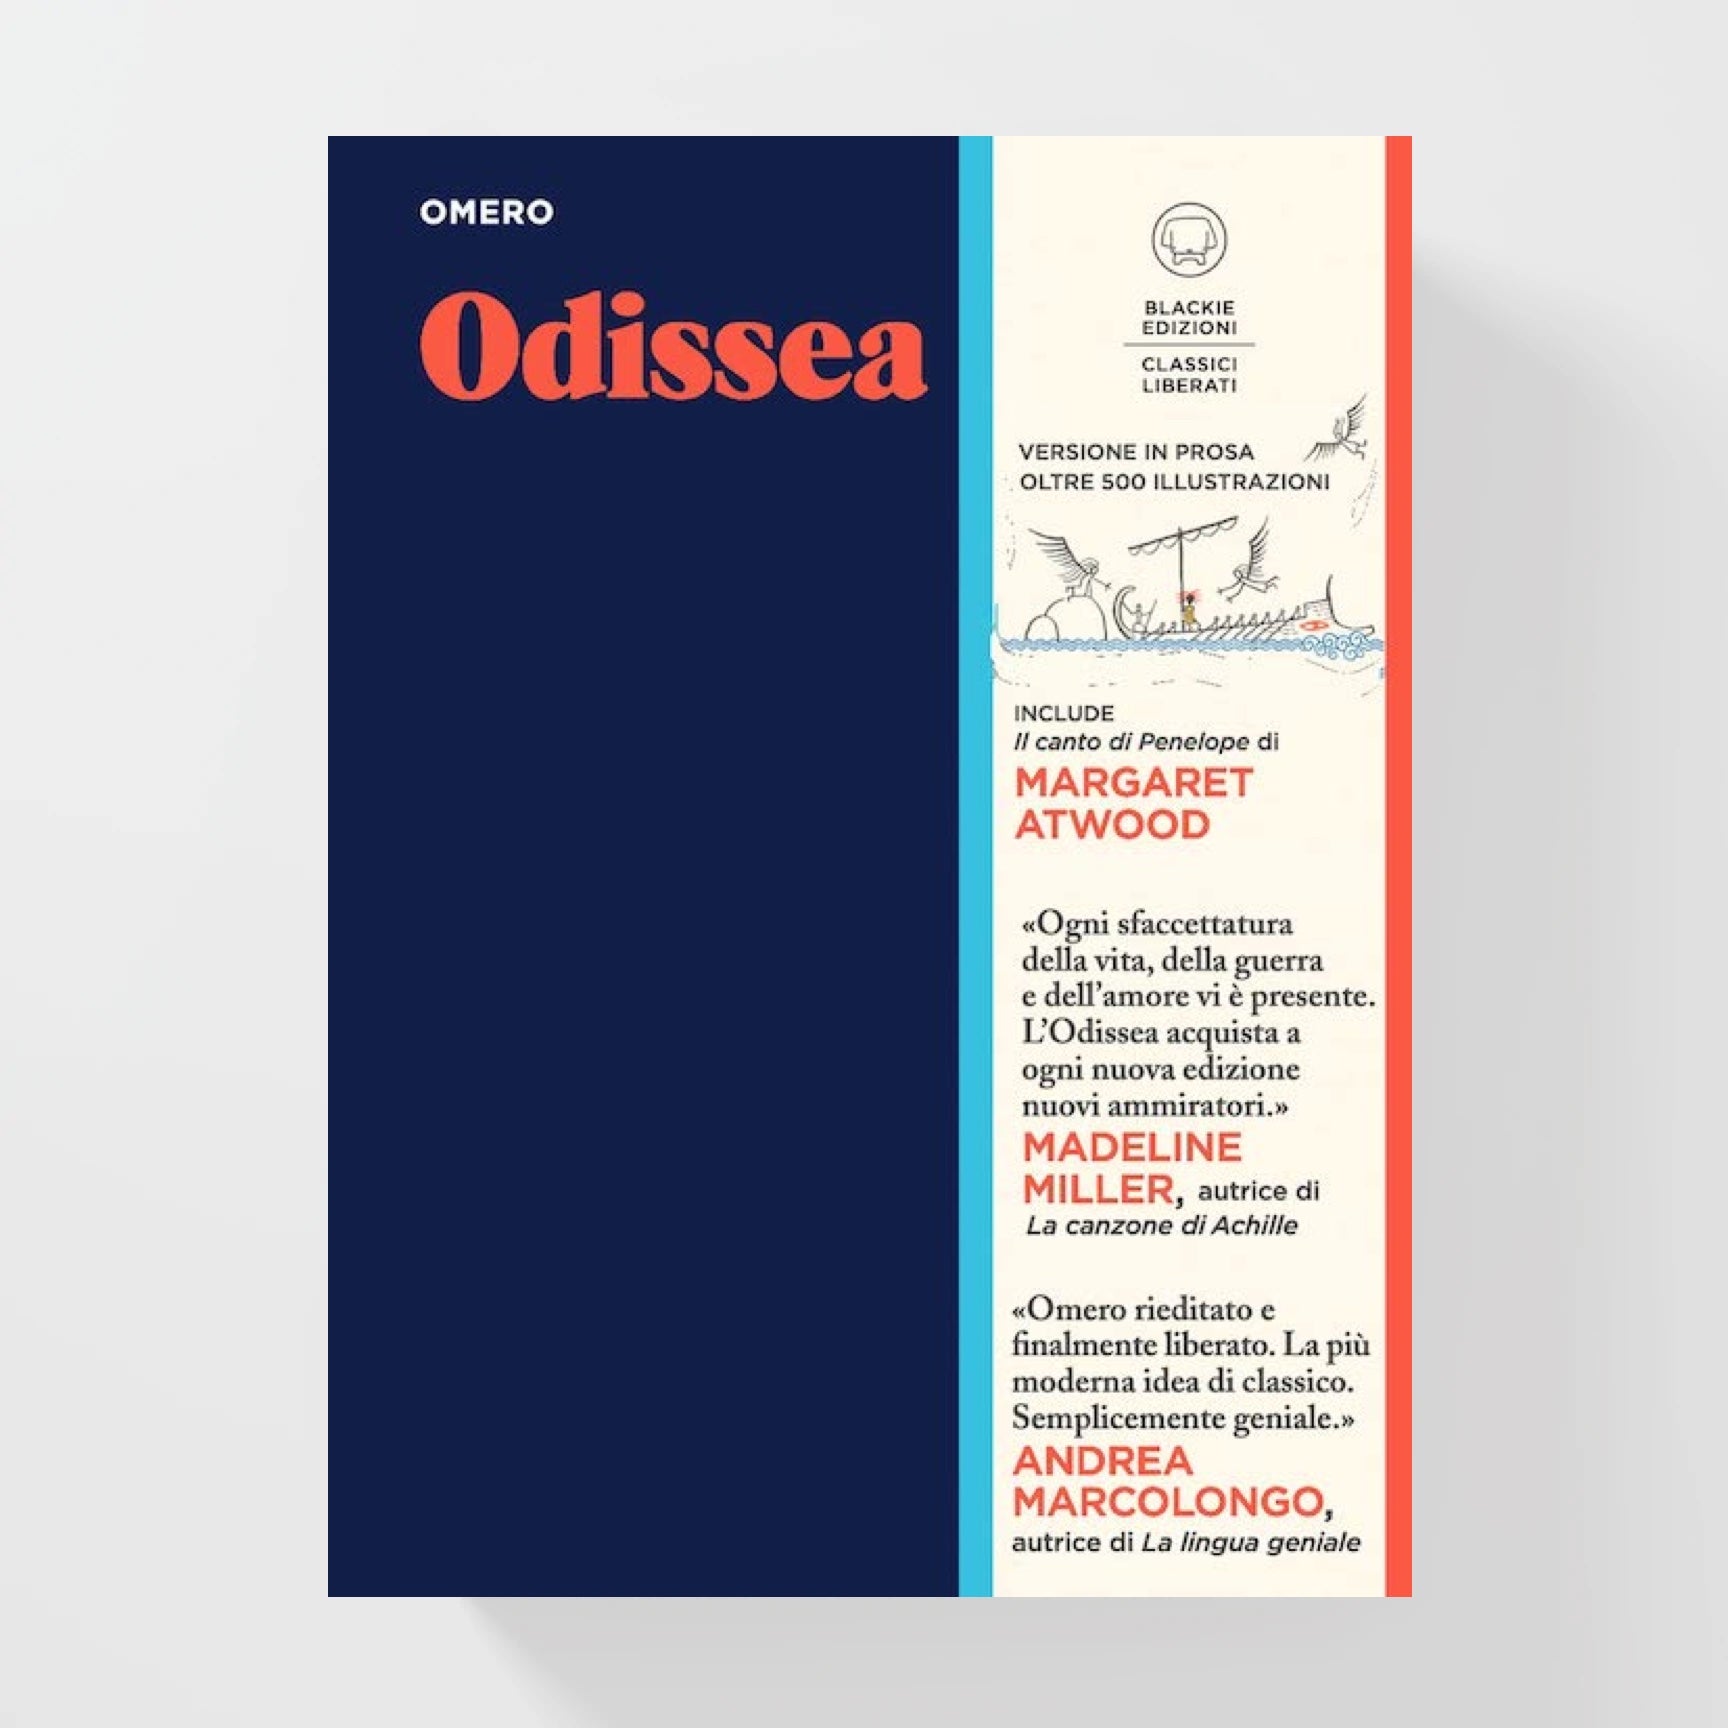 Odissea - Classici liberati – blackie-edizioni